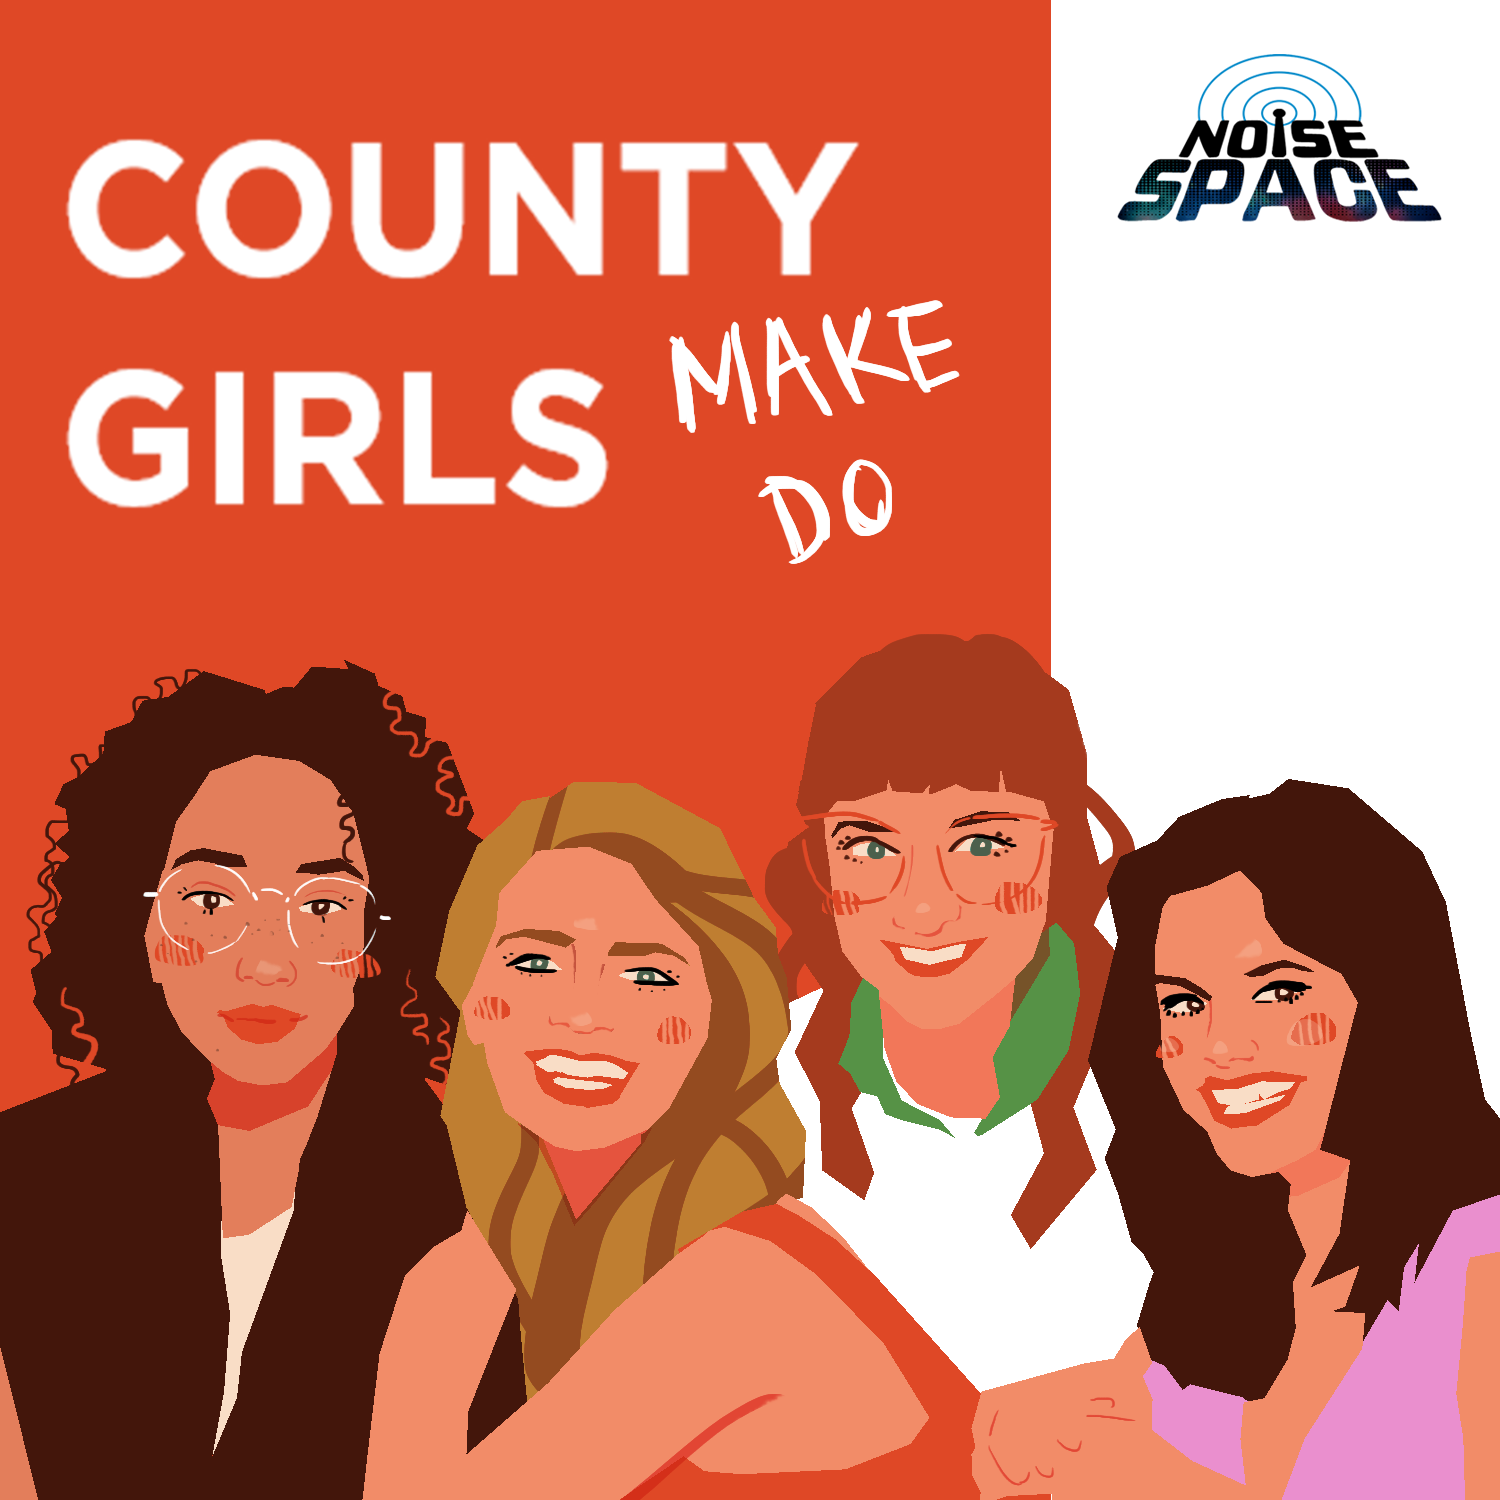 City/County Girls Make Do